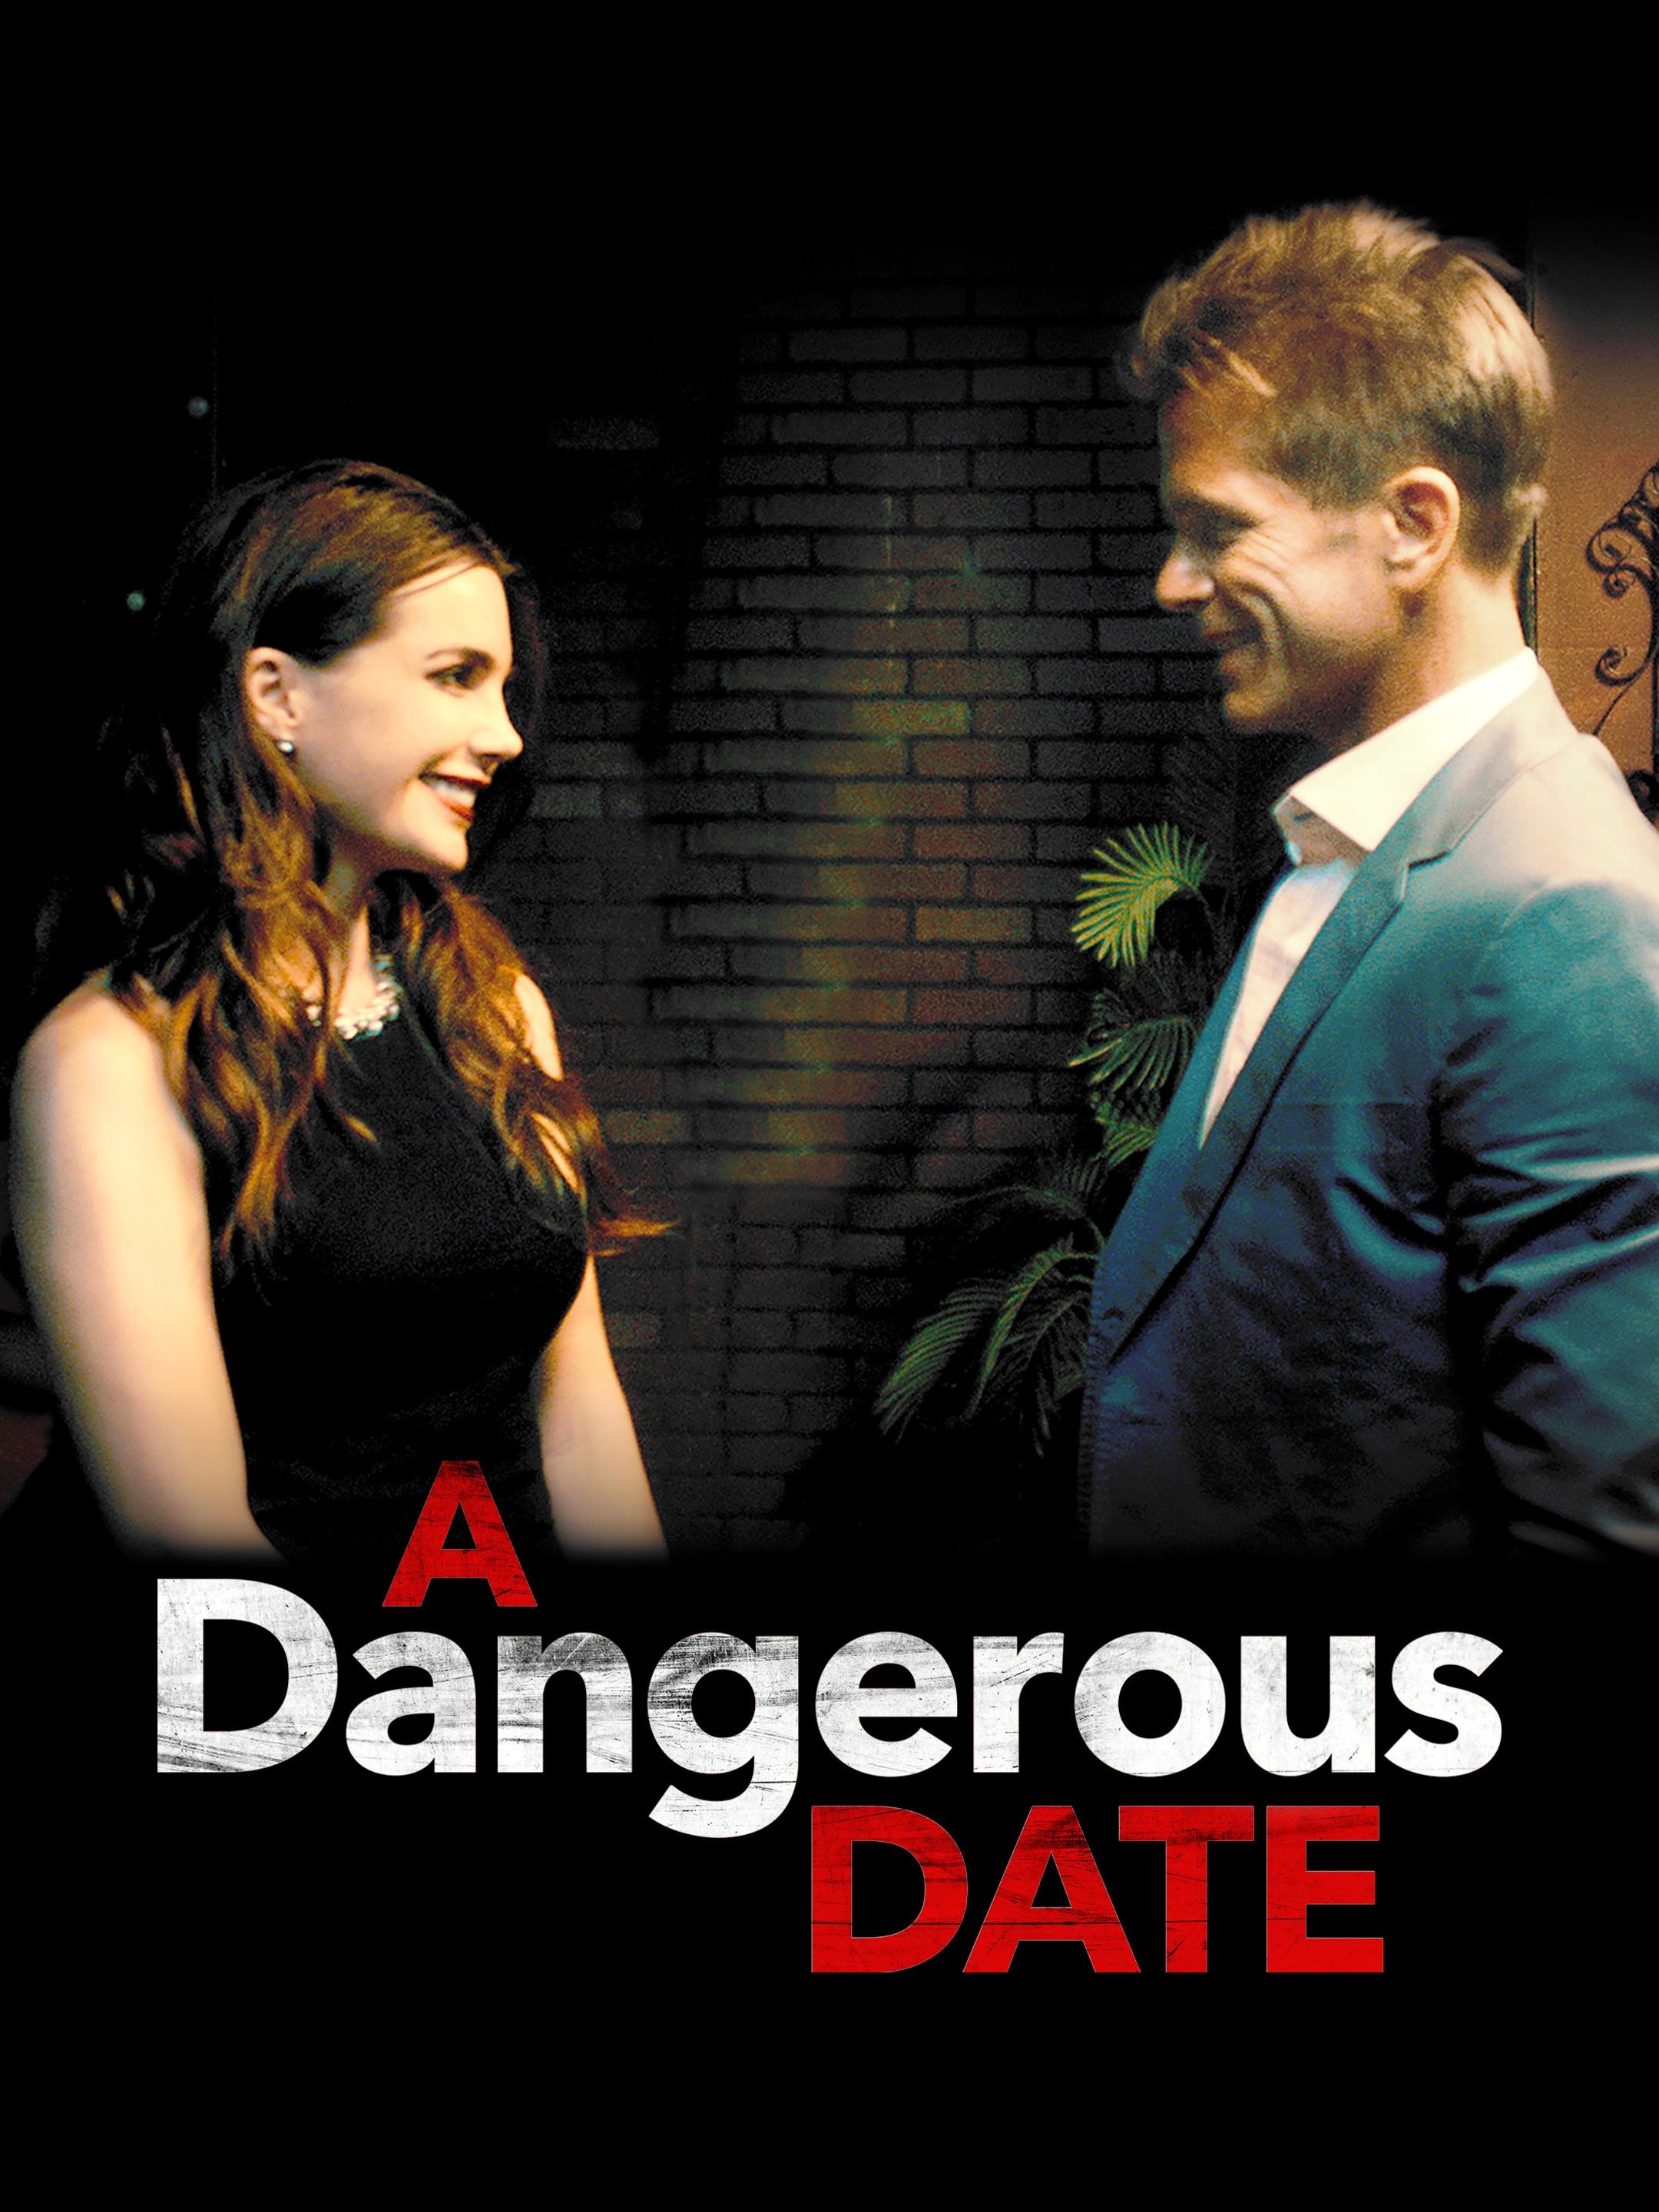 A dangerous date movie